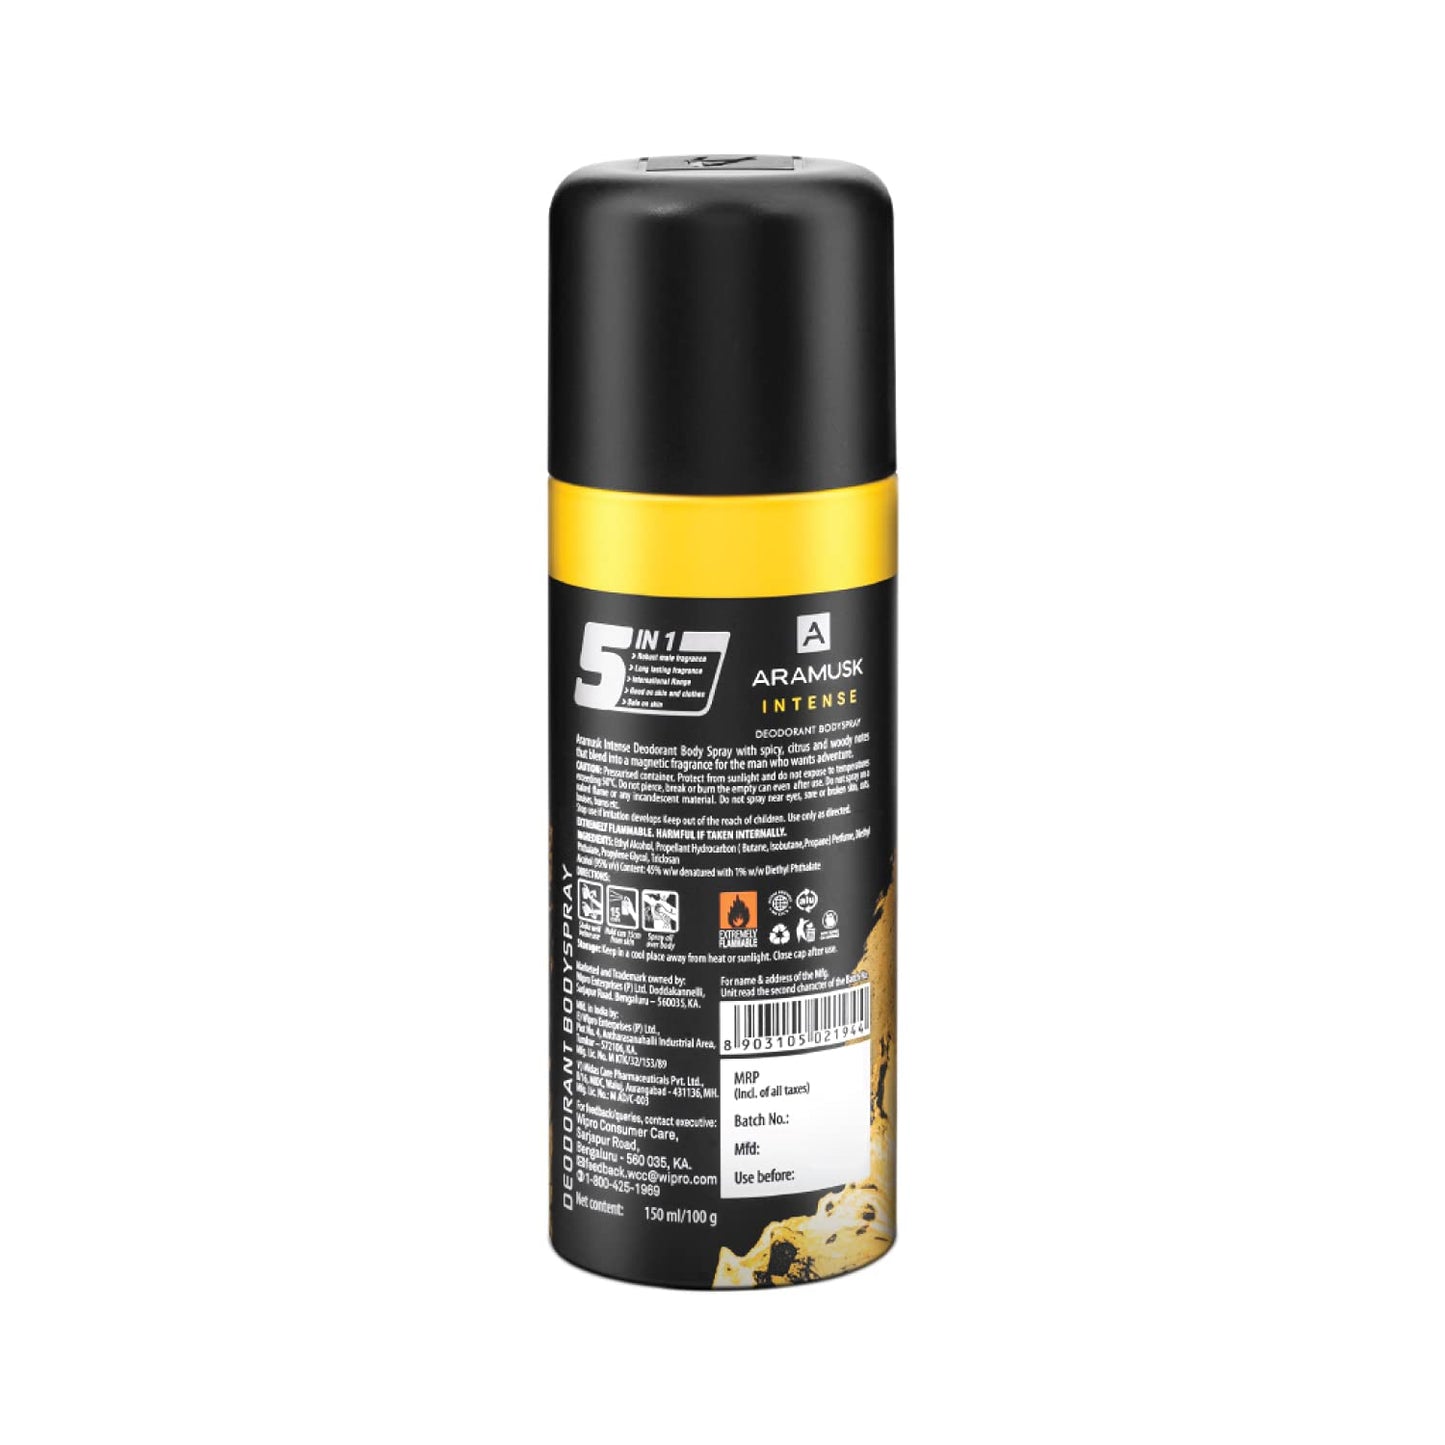 Aramusk Intense Deodorant Men Body Spray 150ml Pack Of 3